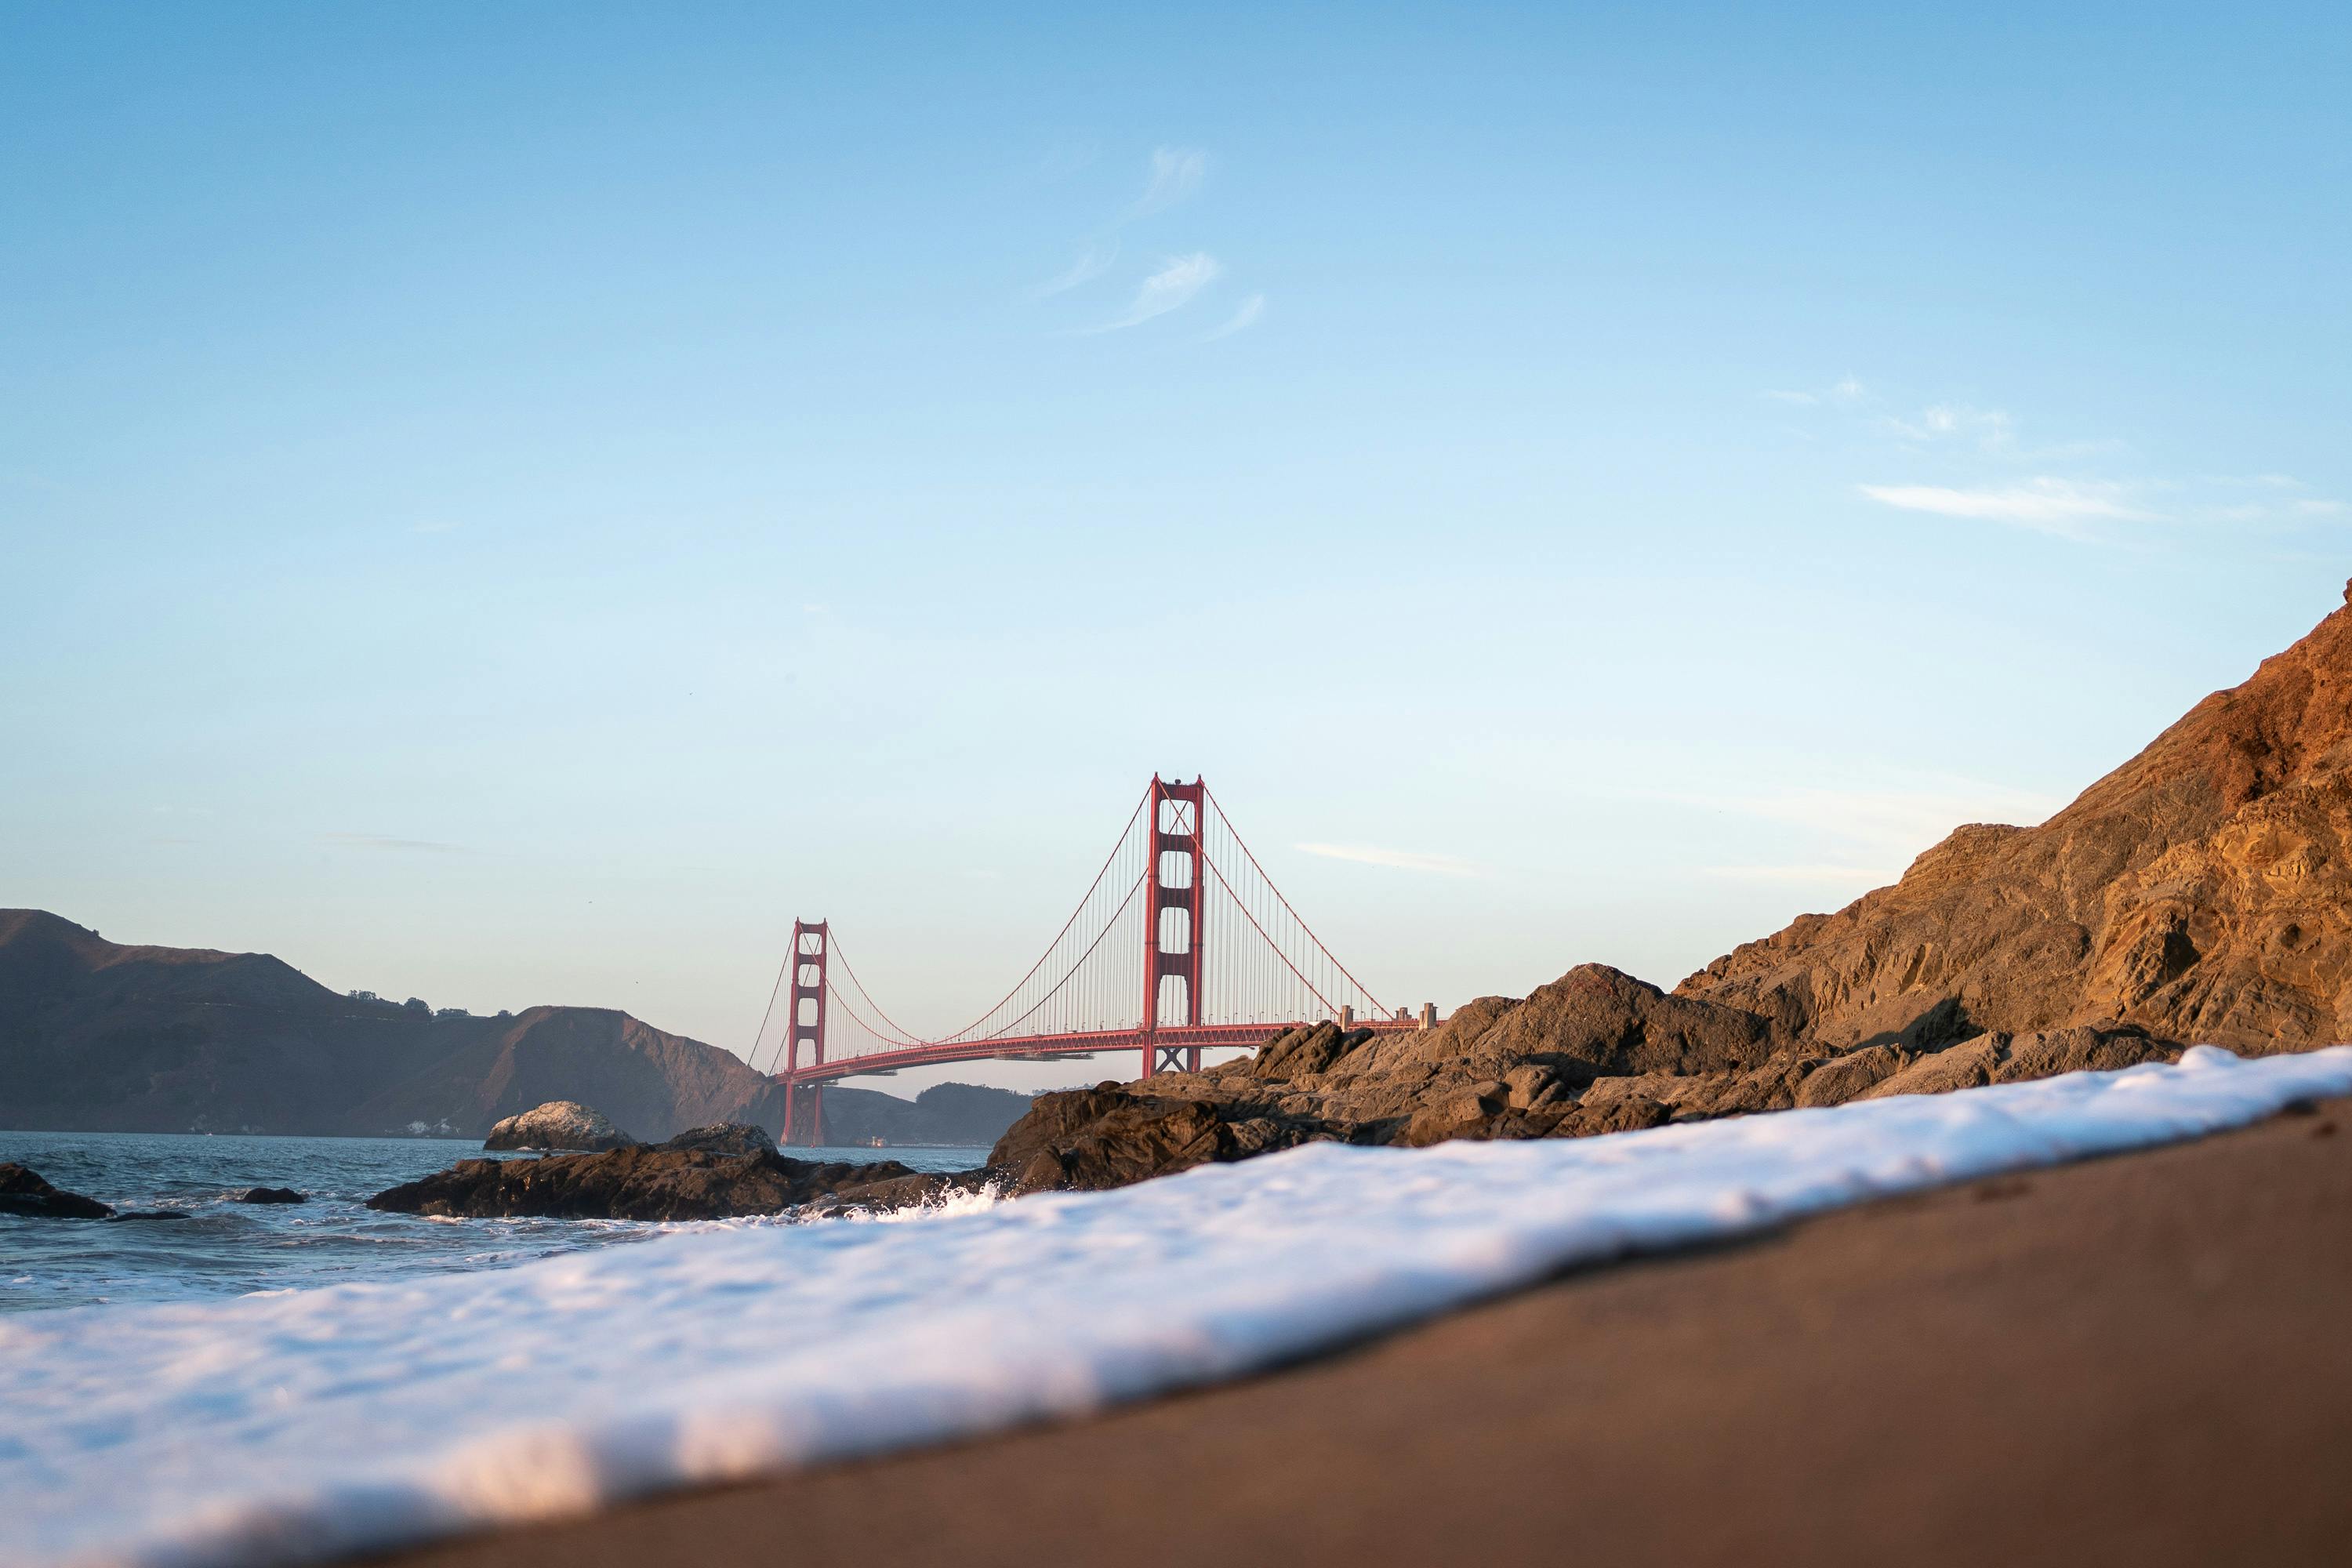 San Francisco Golden Gate Bridge at Sunset